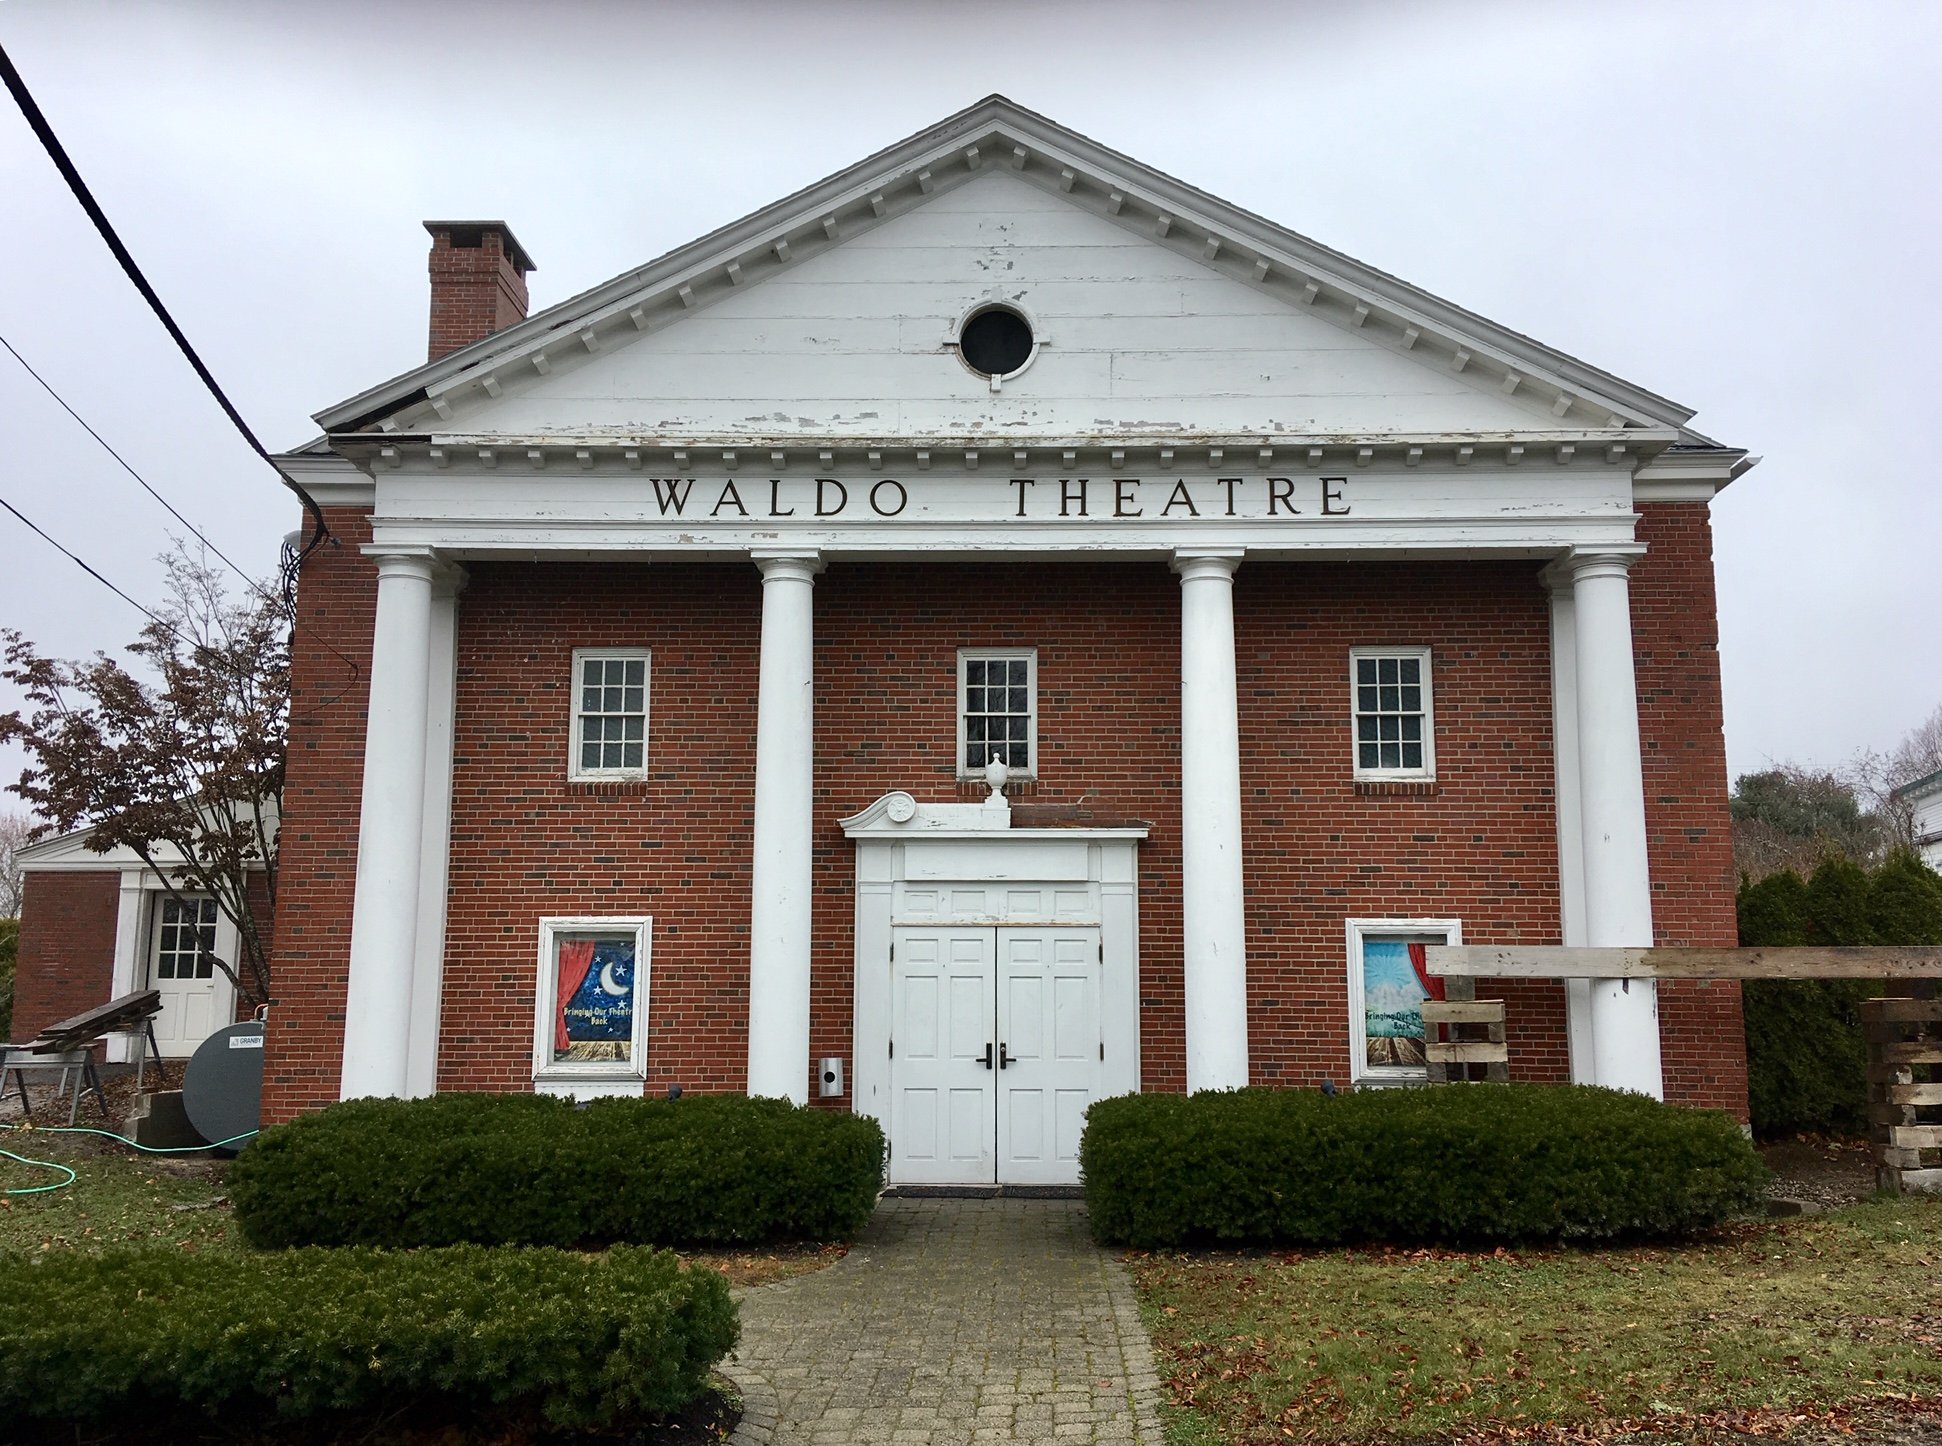 Waldo Theatre, Waldoboro